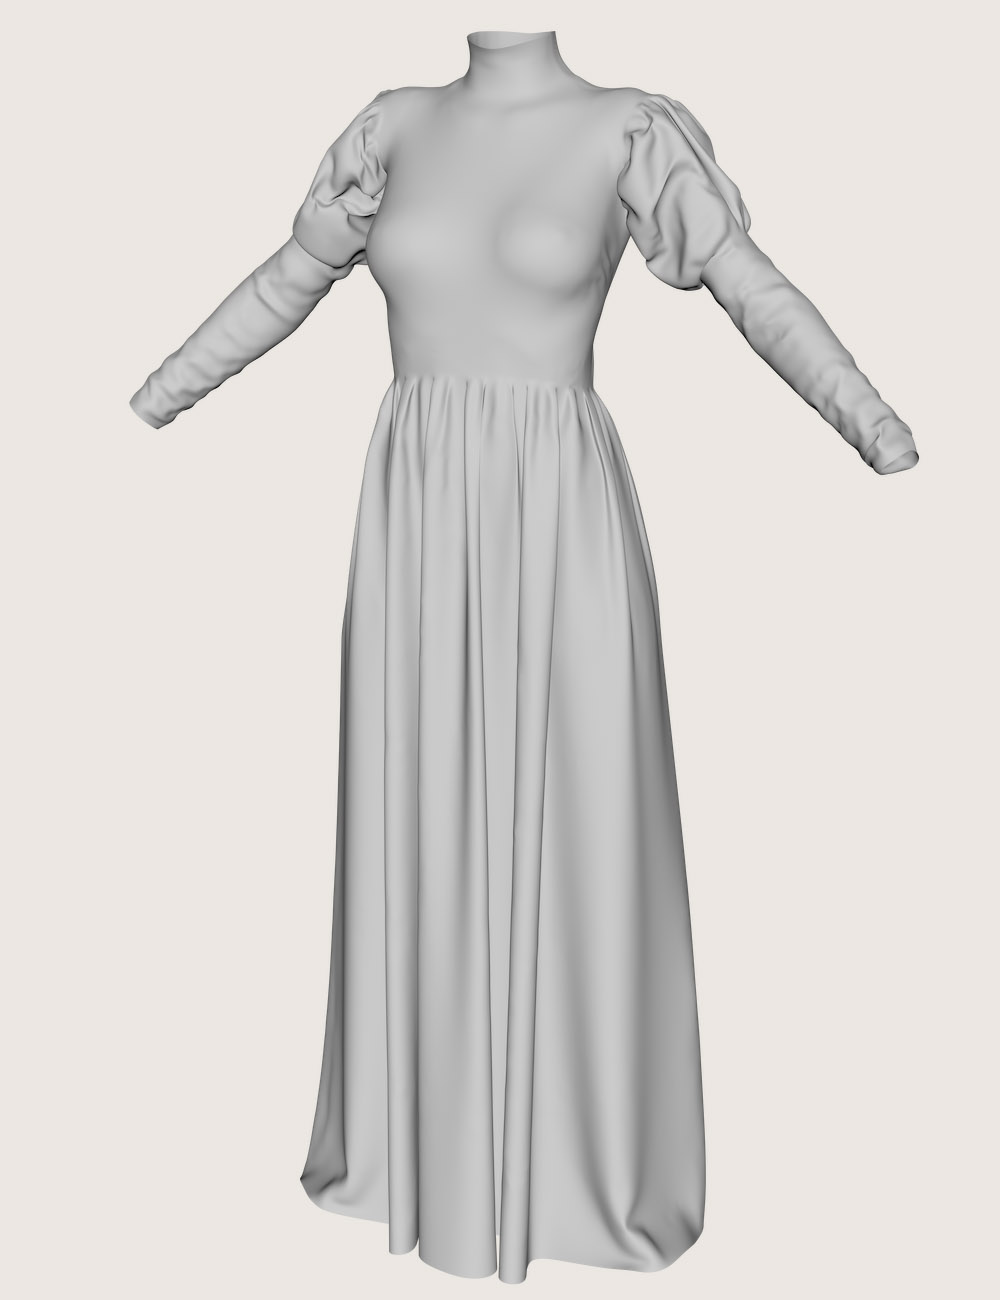 dForce Regal Dress for Genesis 8 Female(s) by: Oskarsson, 3D Models by Daz 3D